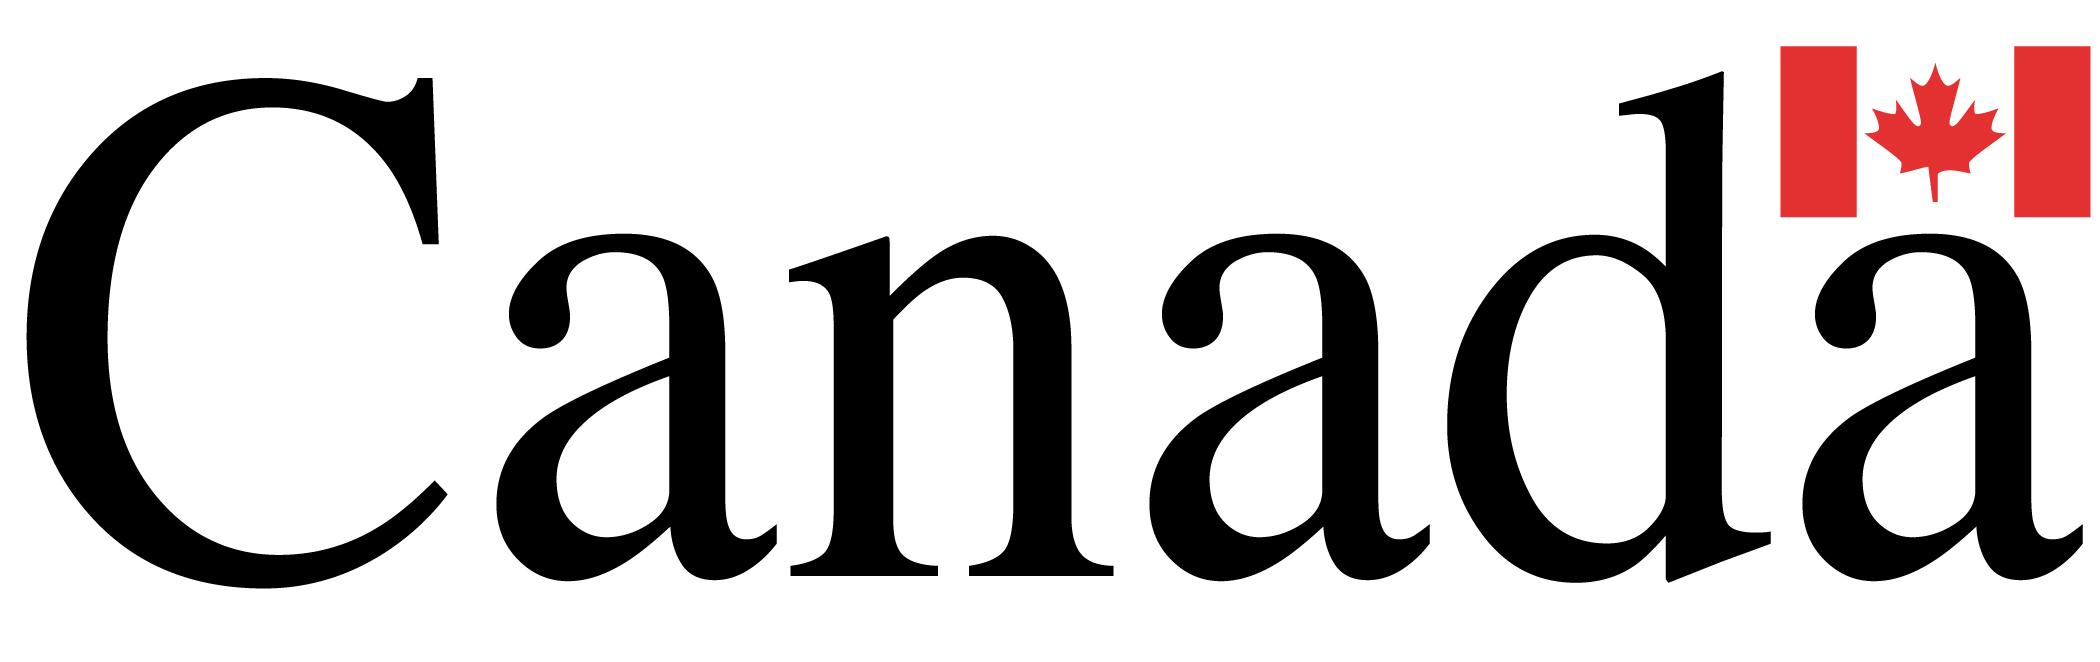 Canada Logo - Canada Logo Community Services